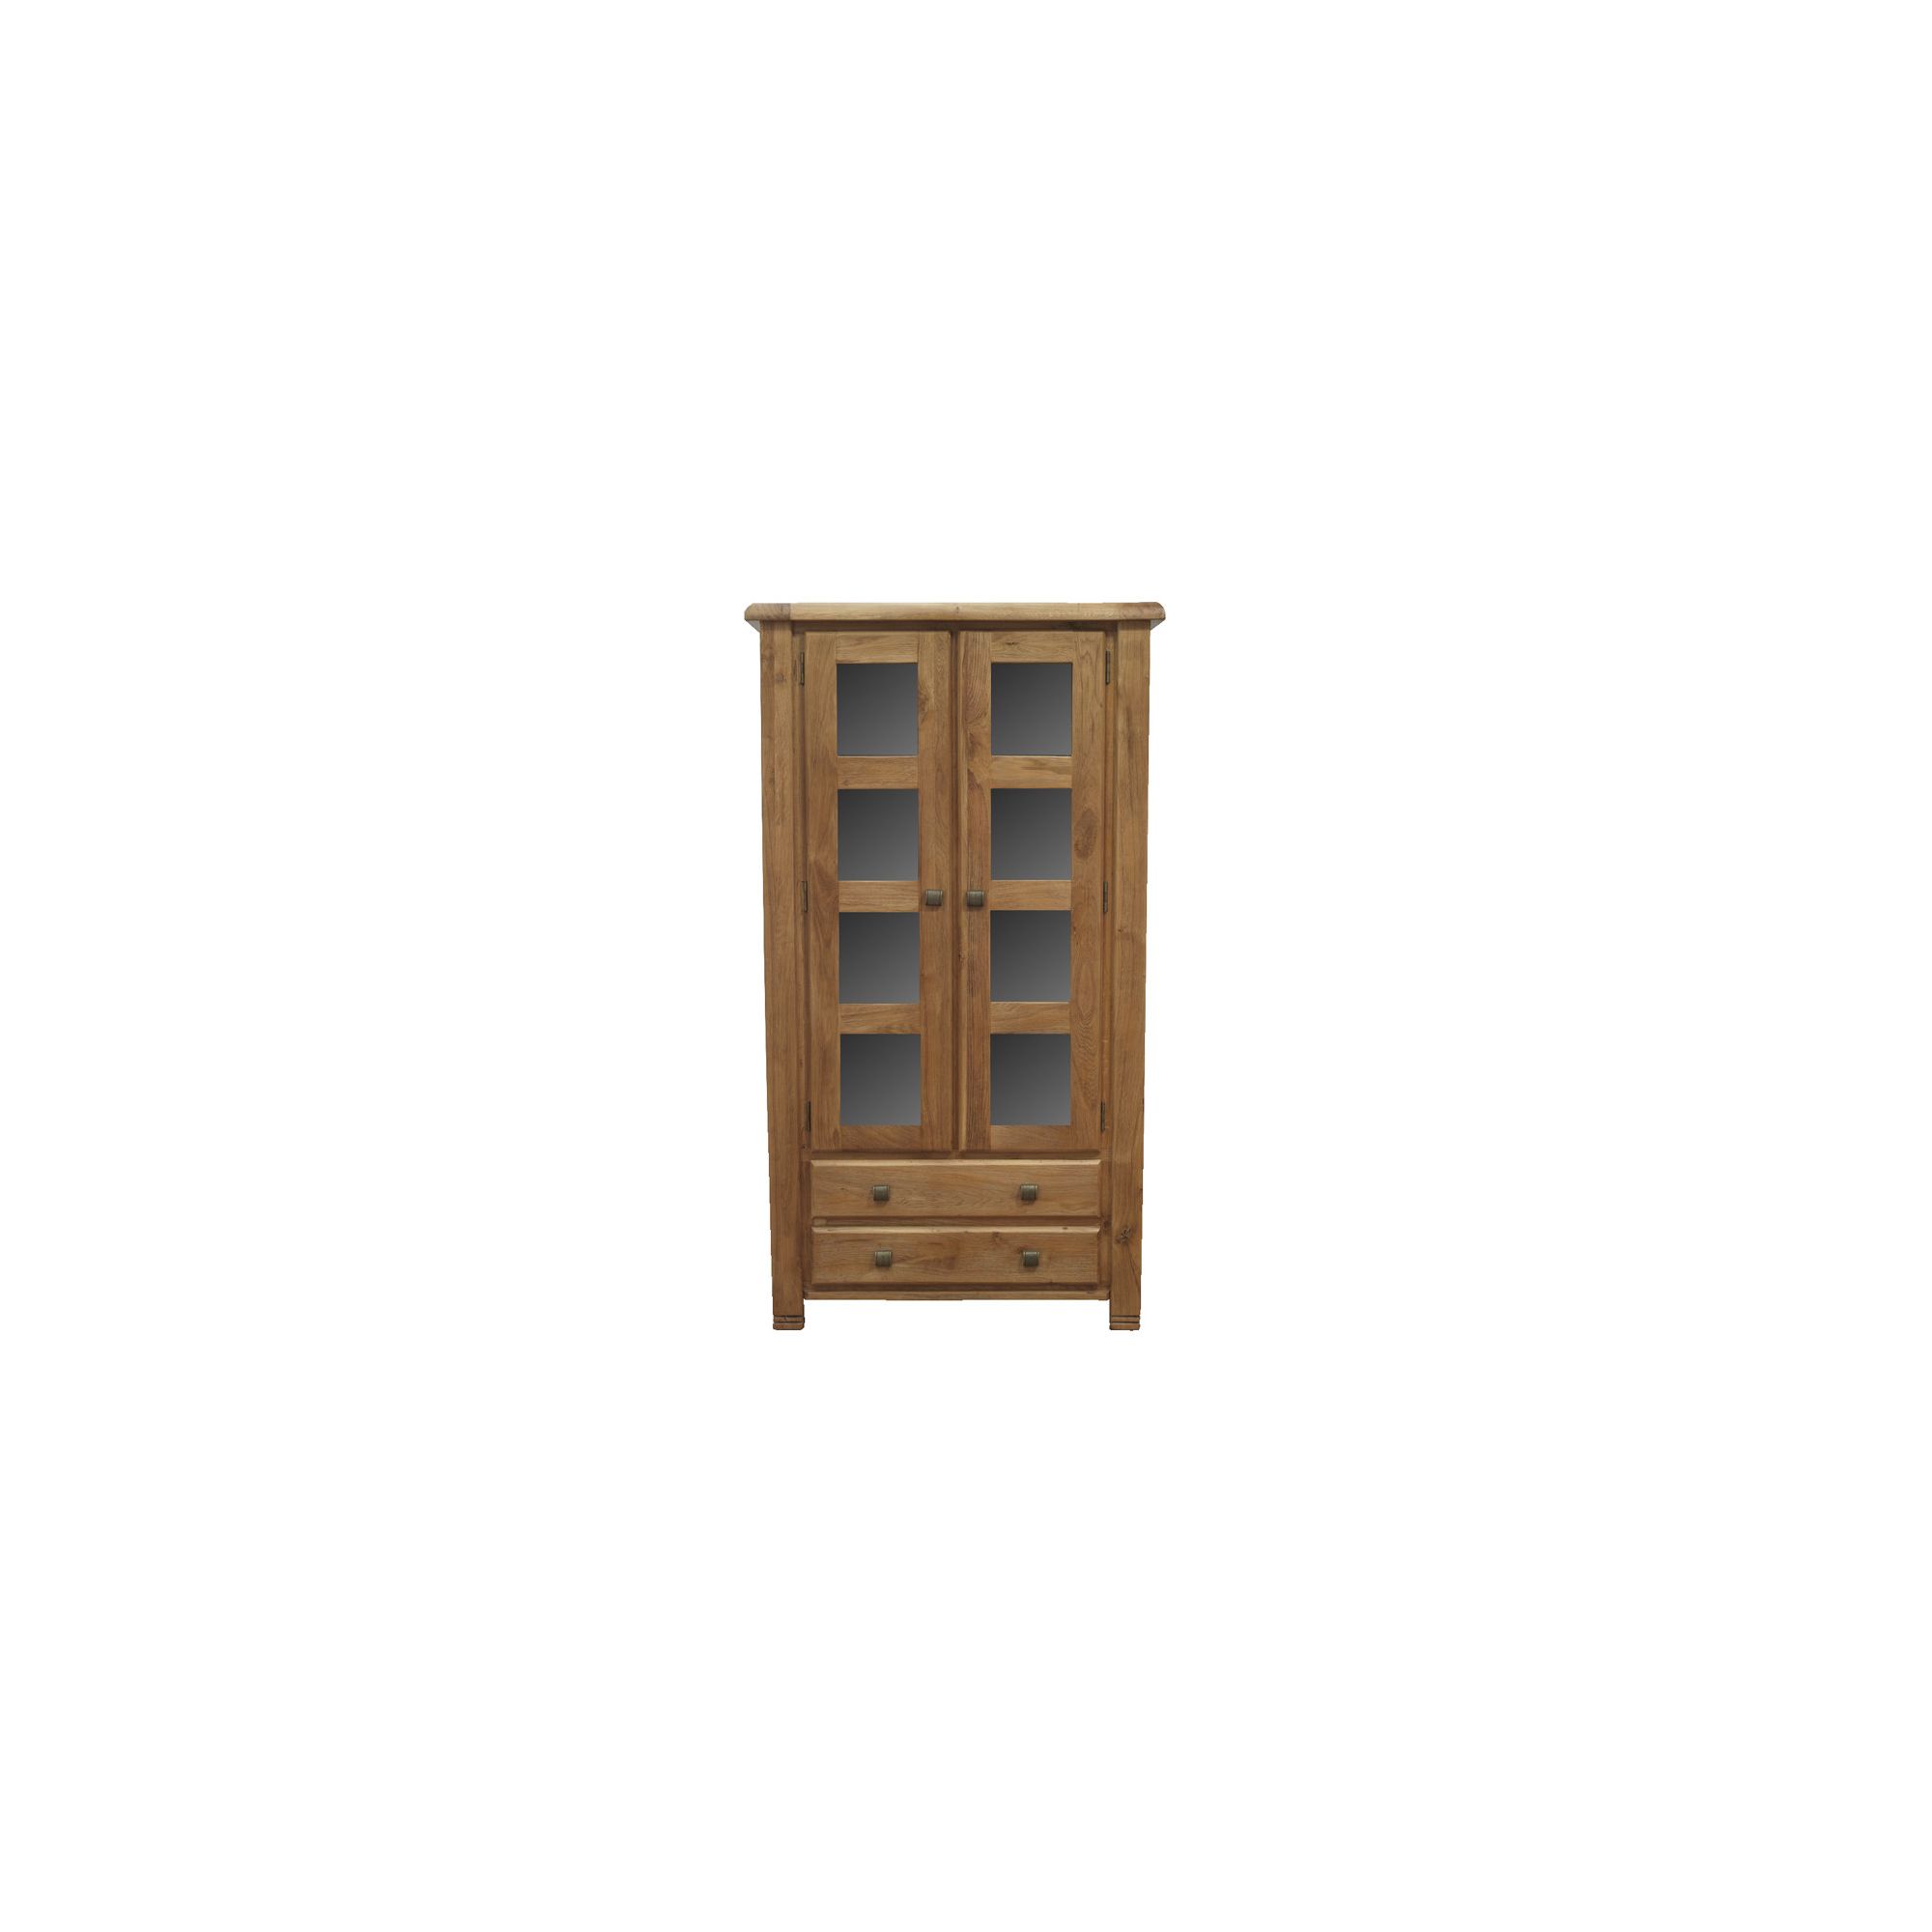 Furniture Link Danube Display Cabinet in Weathered Oak at Tesco Direct